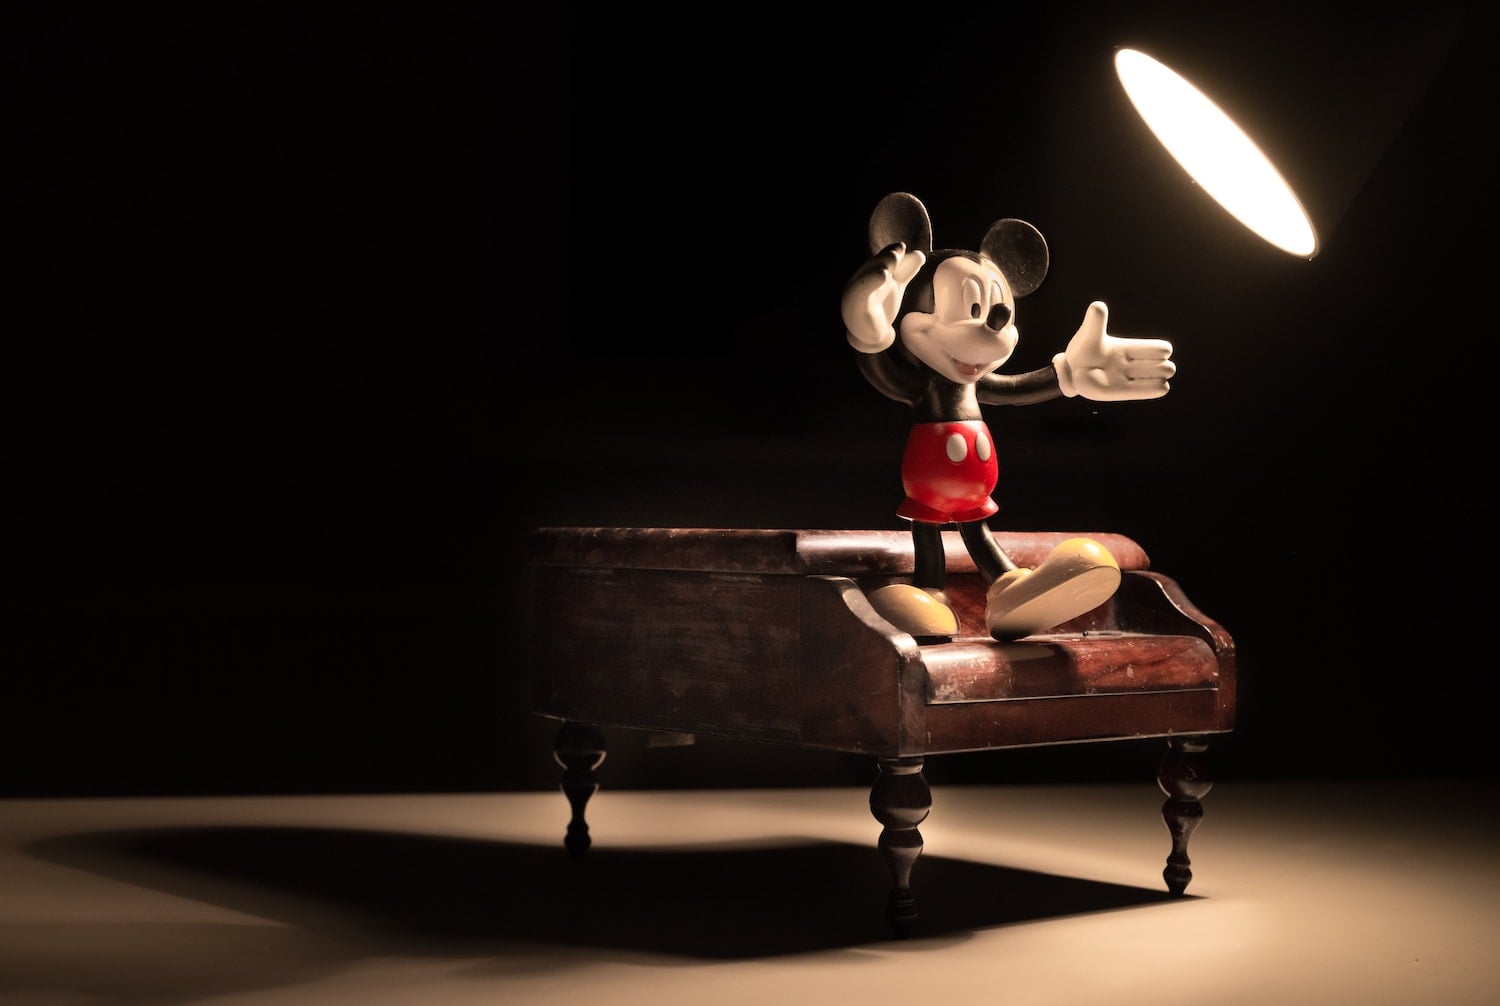 Mickey Mouse Disney Urheberrecht Copyright läuft 2024 aus